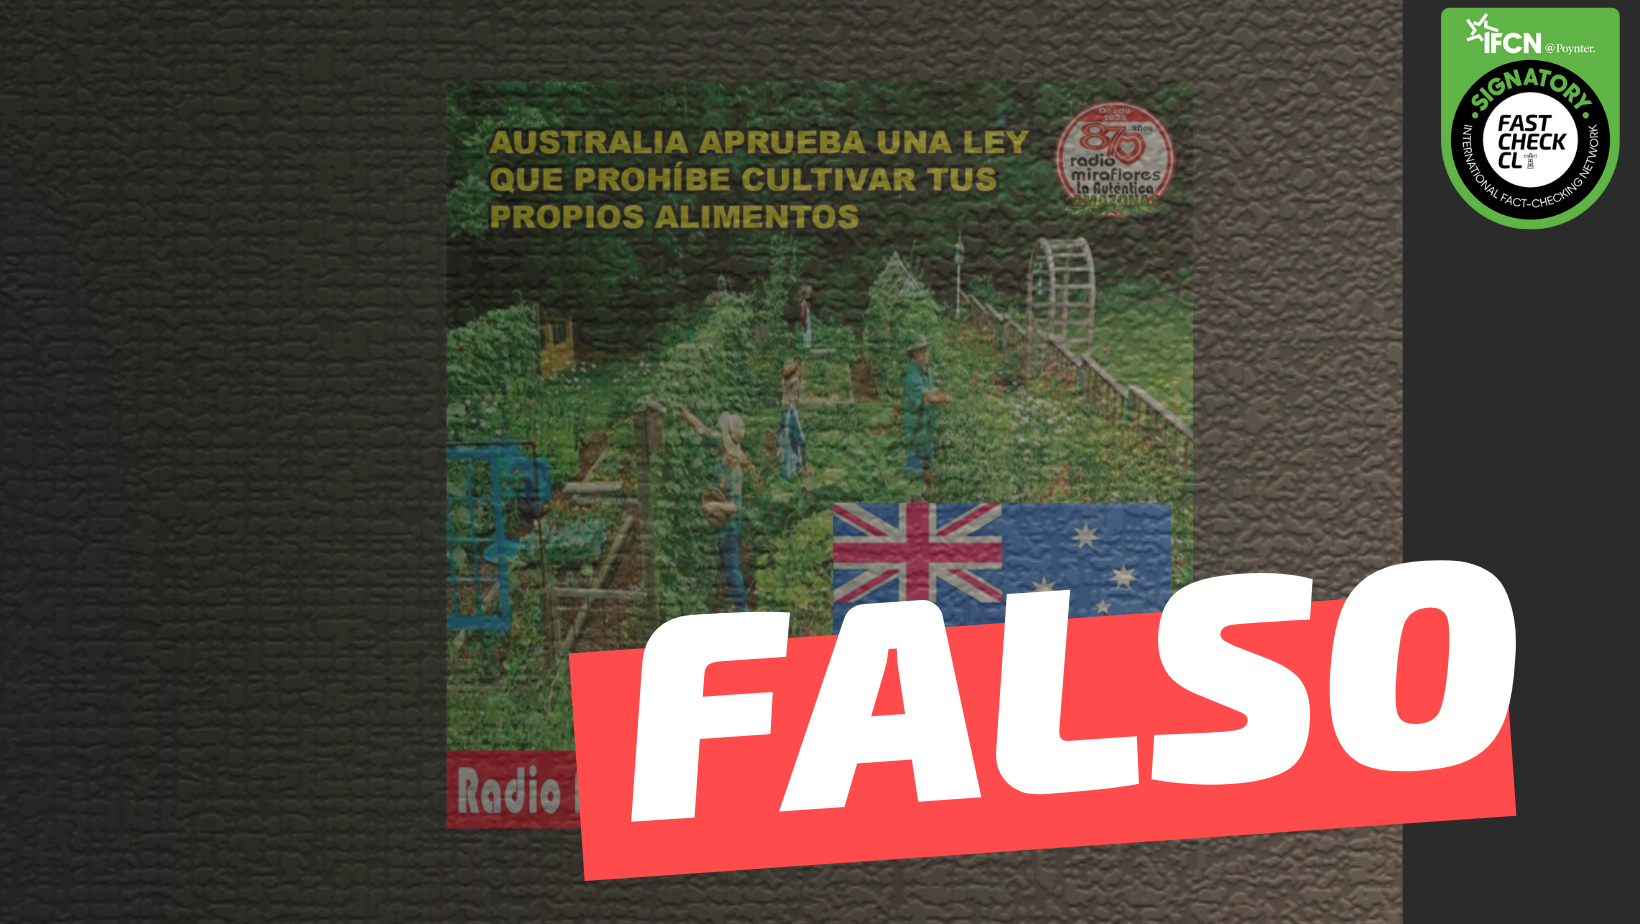 You are currently viewing “Australia aprueba una ley que prohibe cultivar tus propios alimentos”: #Falso